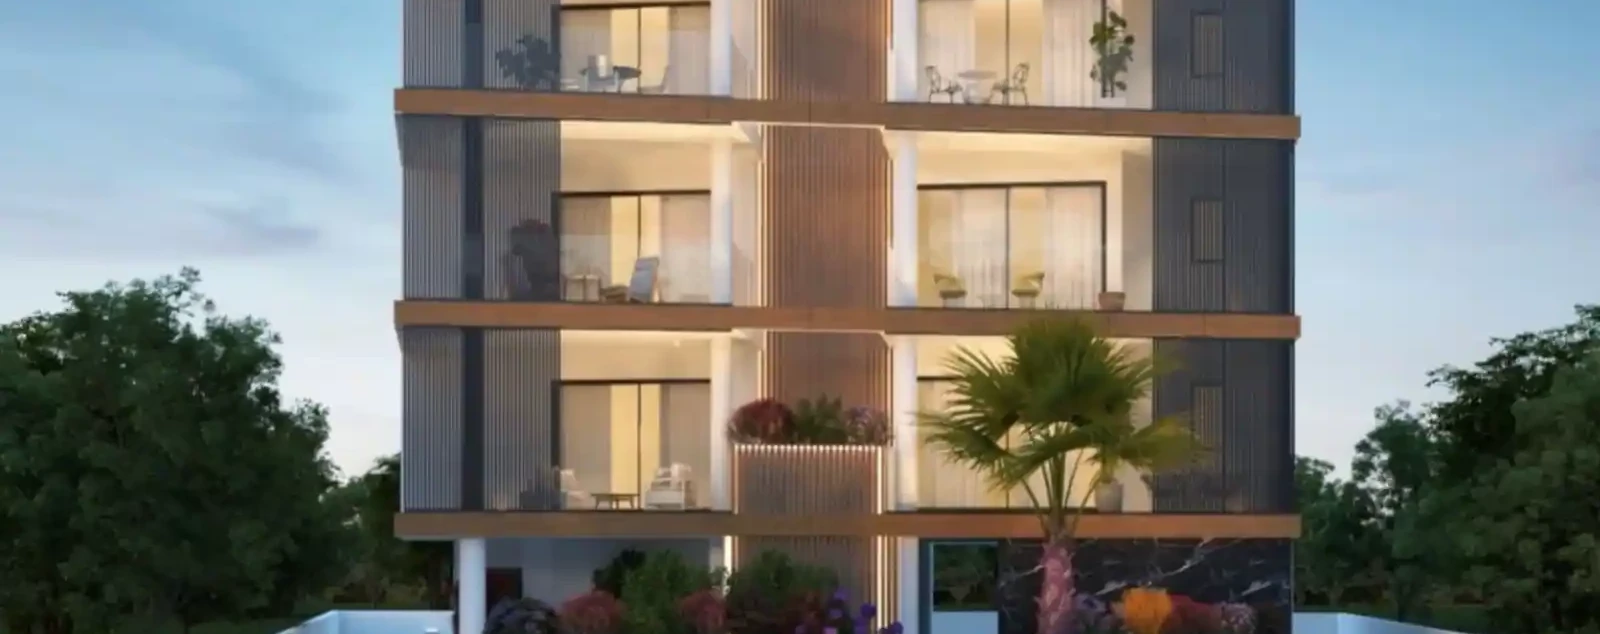 2-bedroom penthouse fоr sаle €175.000, image 1